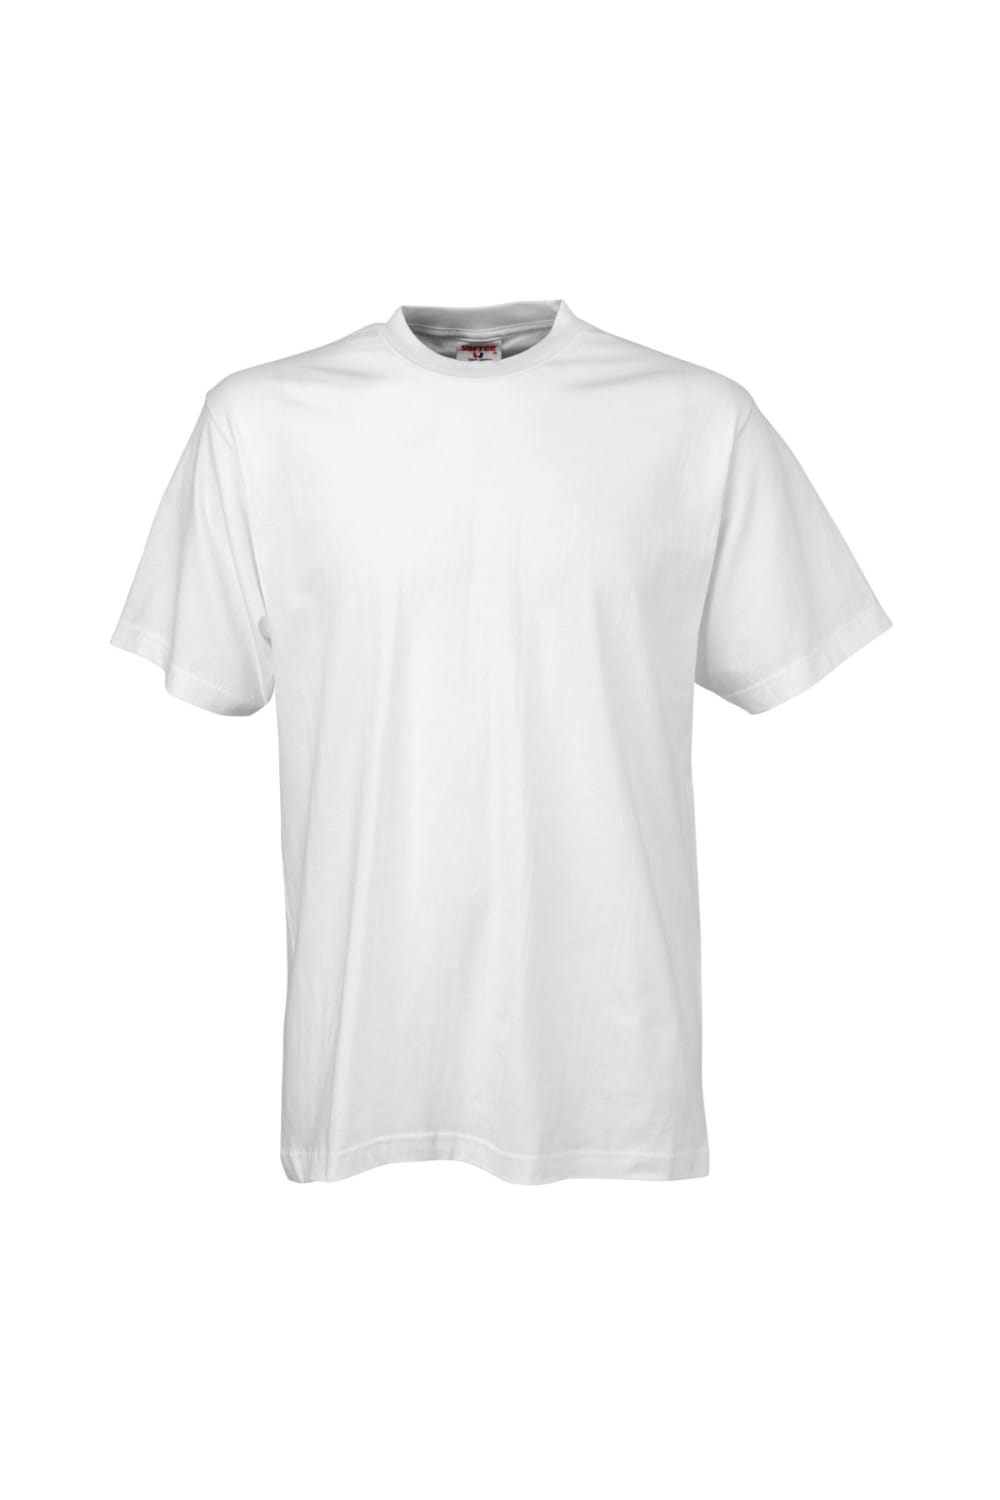 Mens Short Sleeve T-Shirt - White